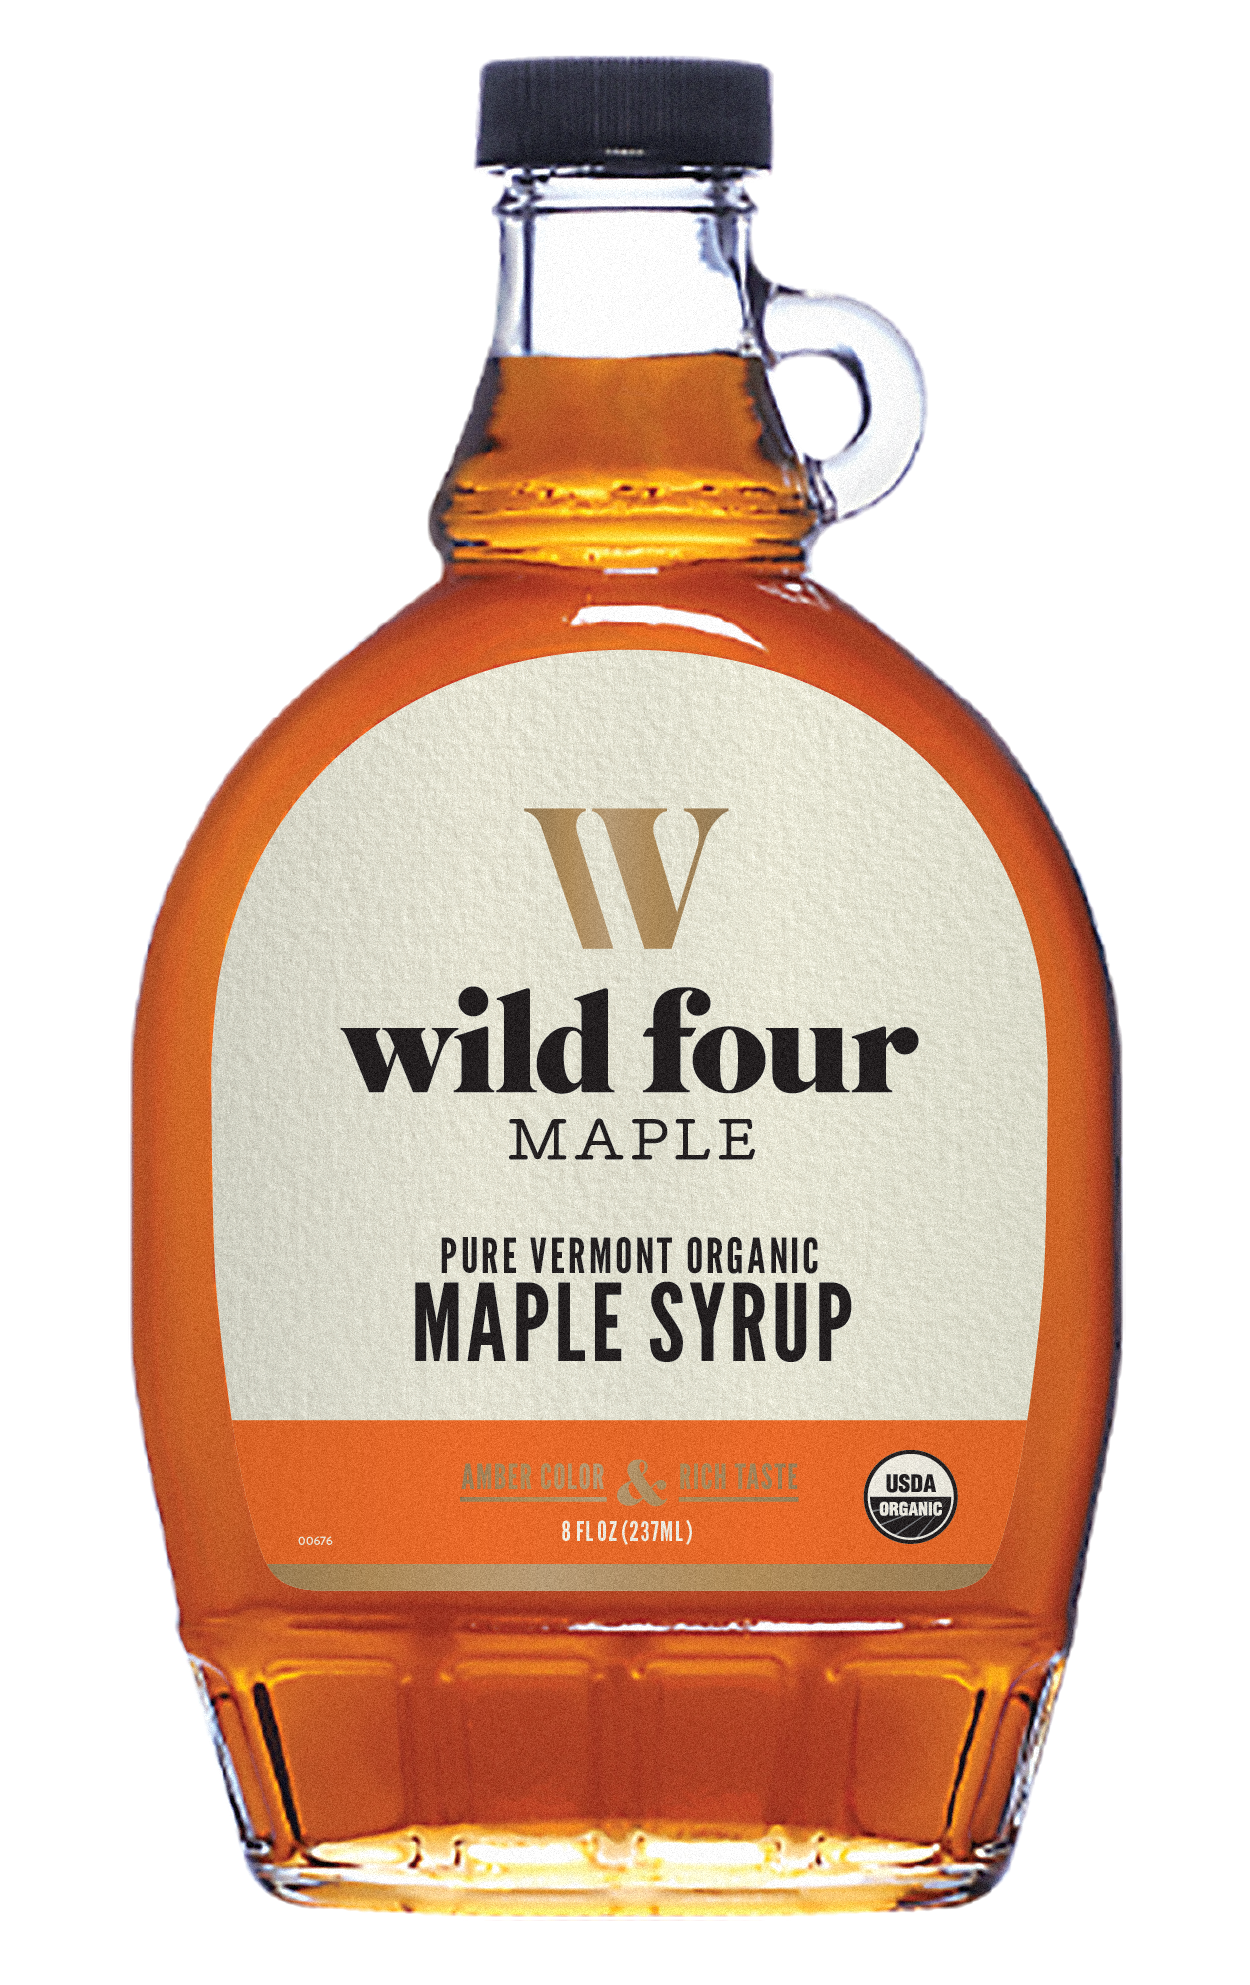 Wild Four Grade A Amber Organic Maple Syrup 12 units per case 8.0 fl